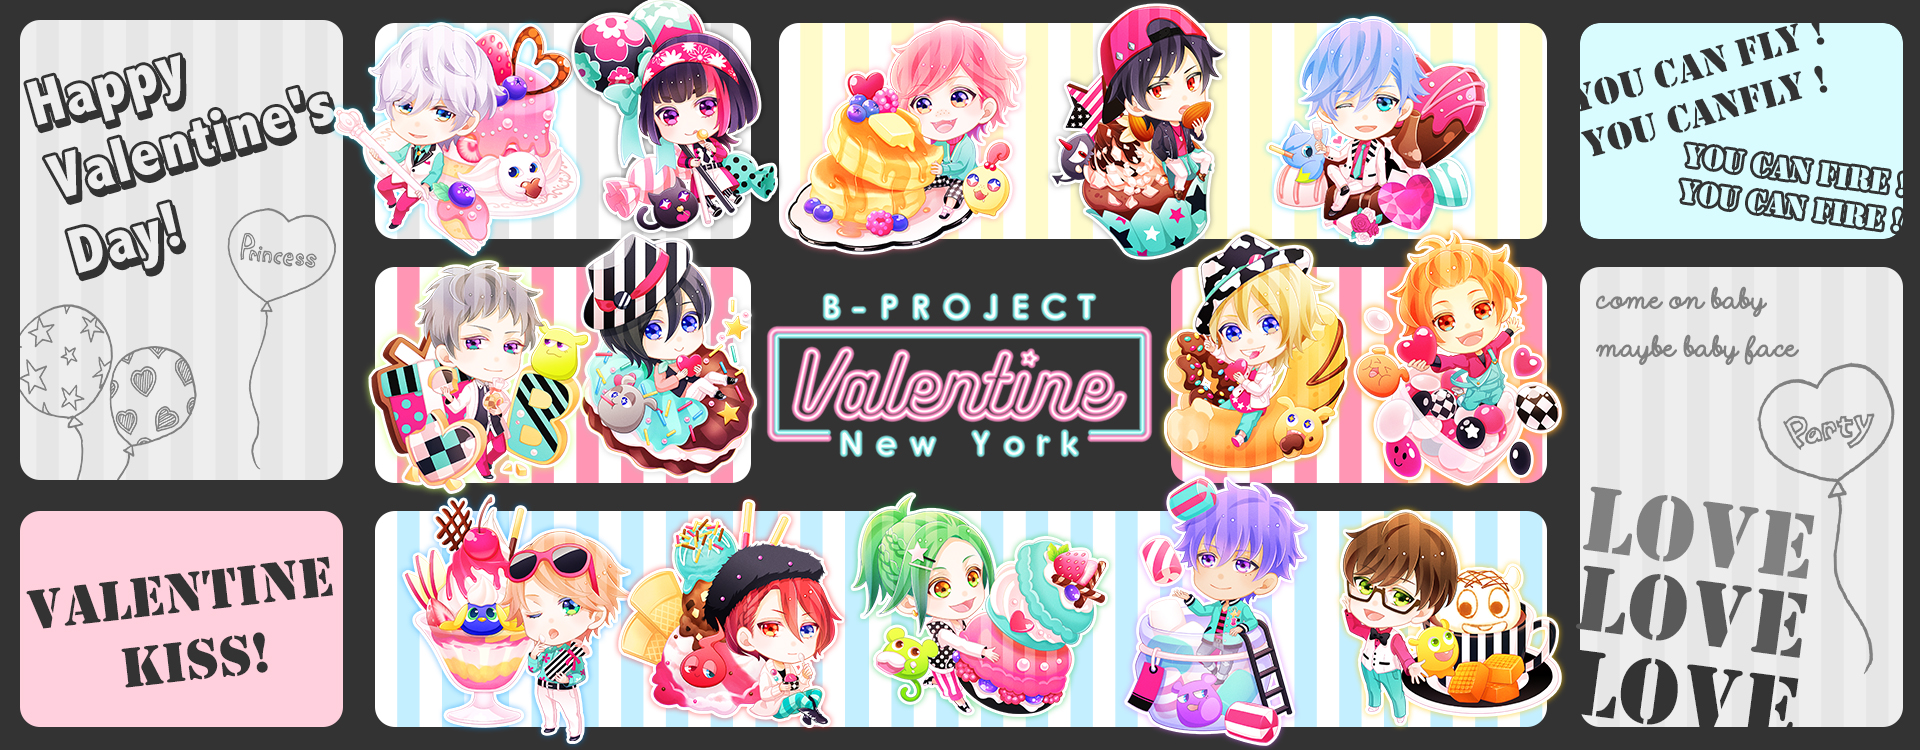 B Project Valentine New York